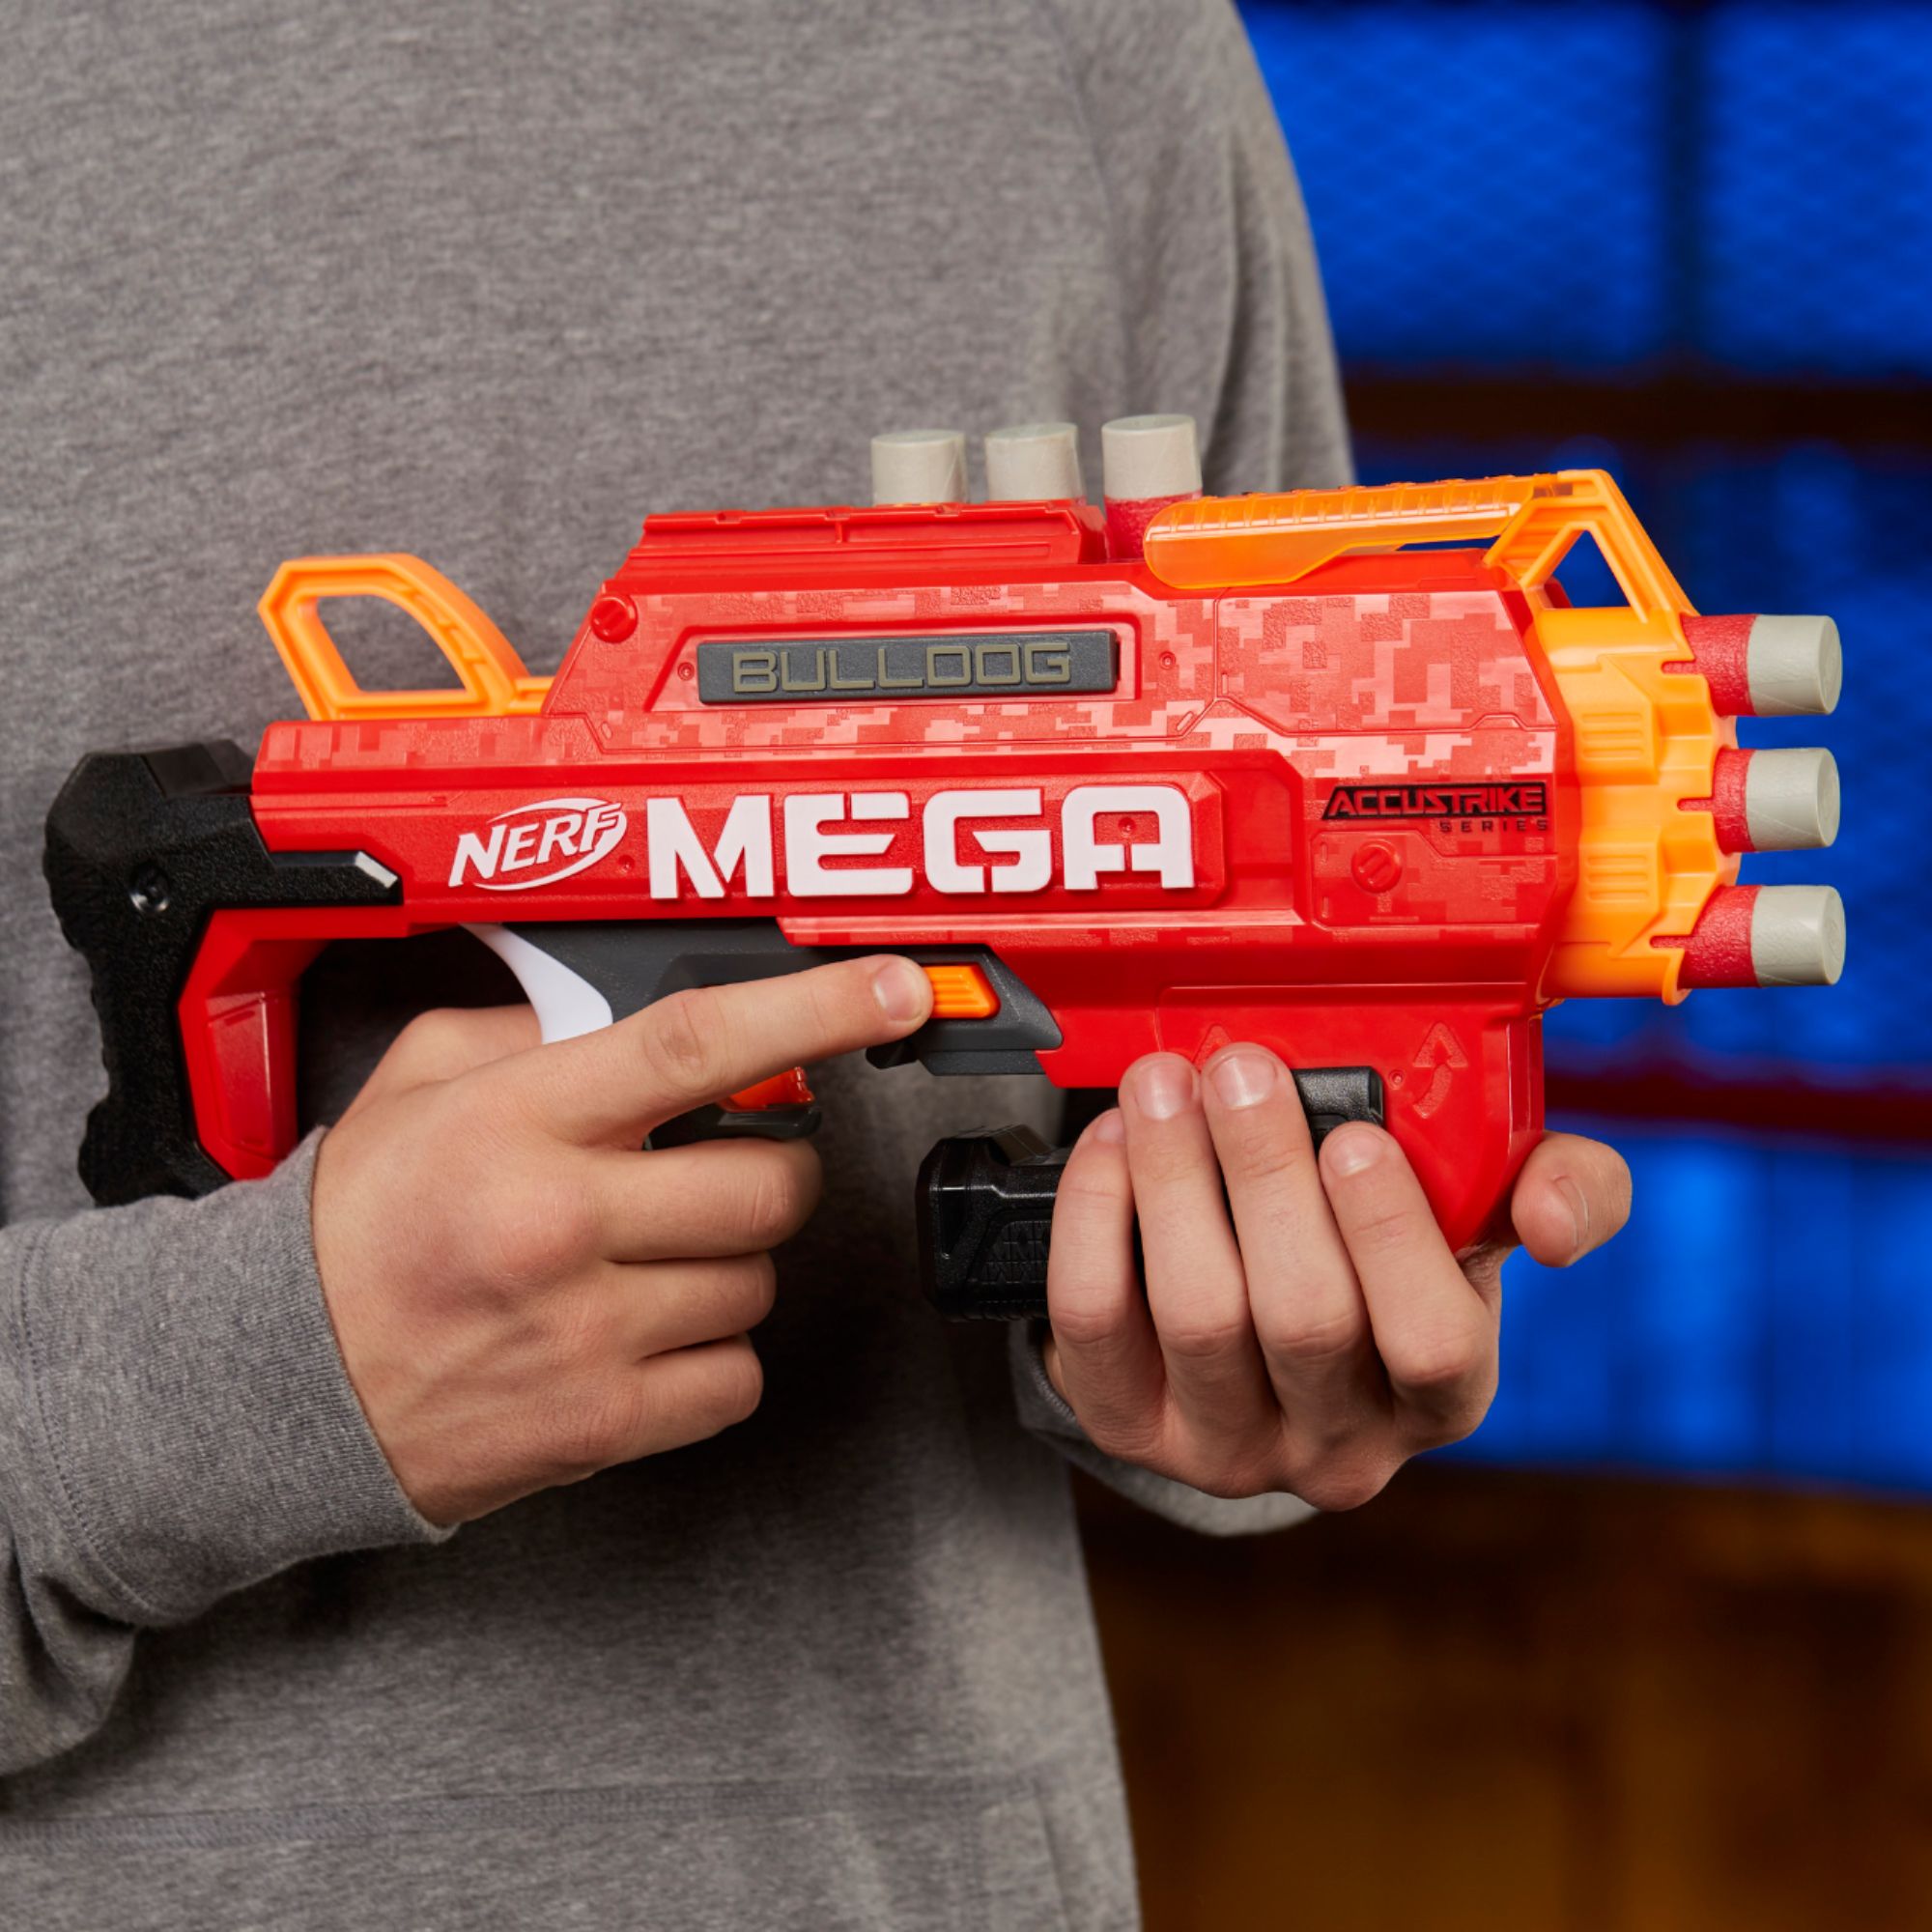 NERF Accustrike Mega Bulldog Blaster Hasbro BRAND 2 Modes for sale online 